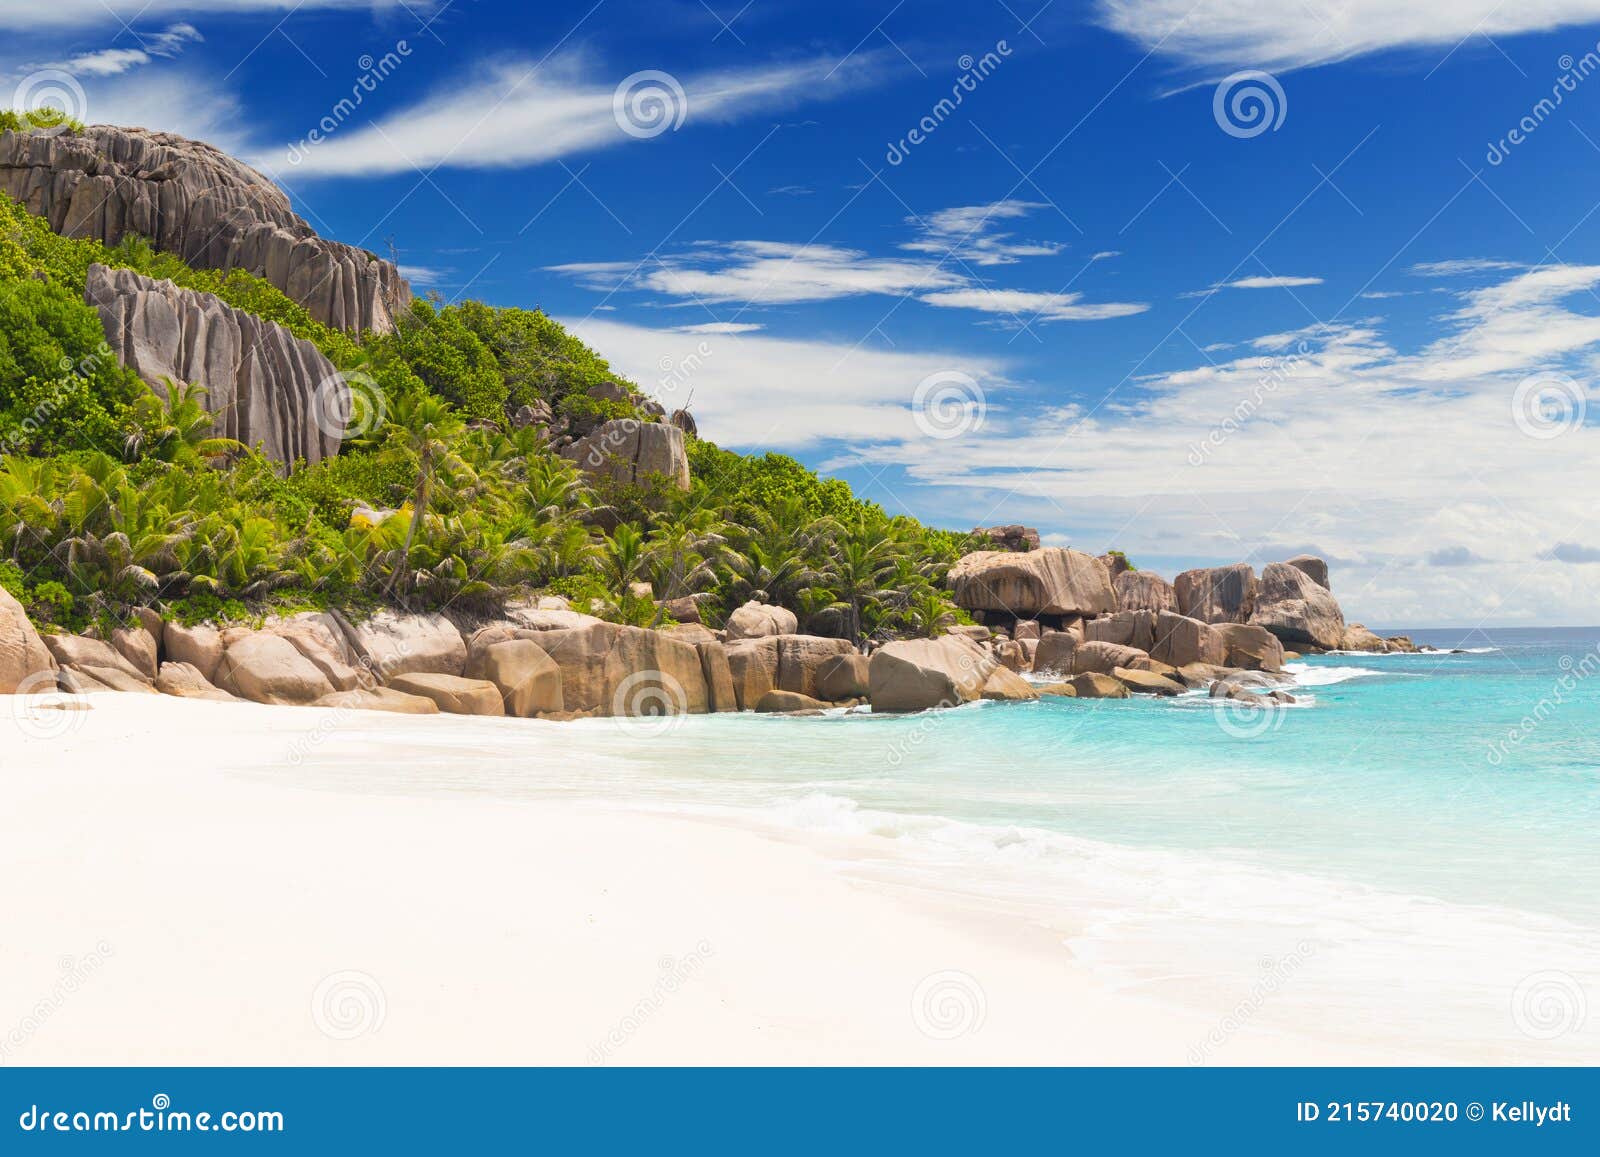 amazing tropical beach with granite boulders on grande soeur island, seychelles